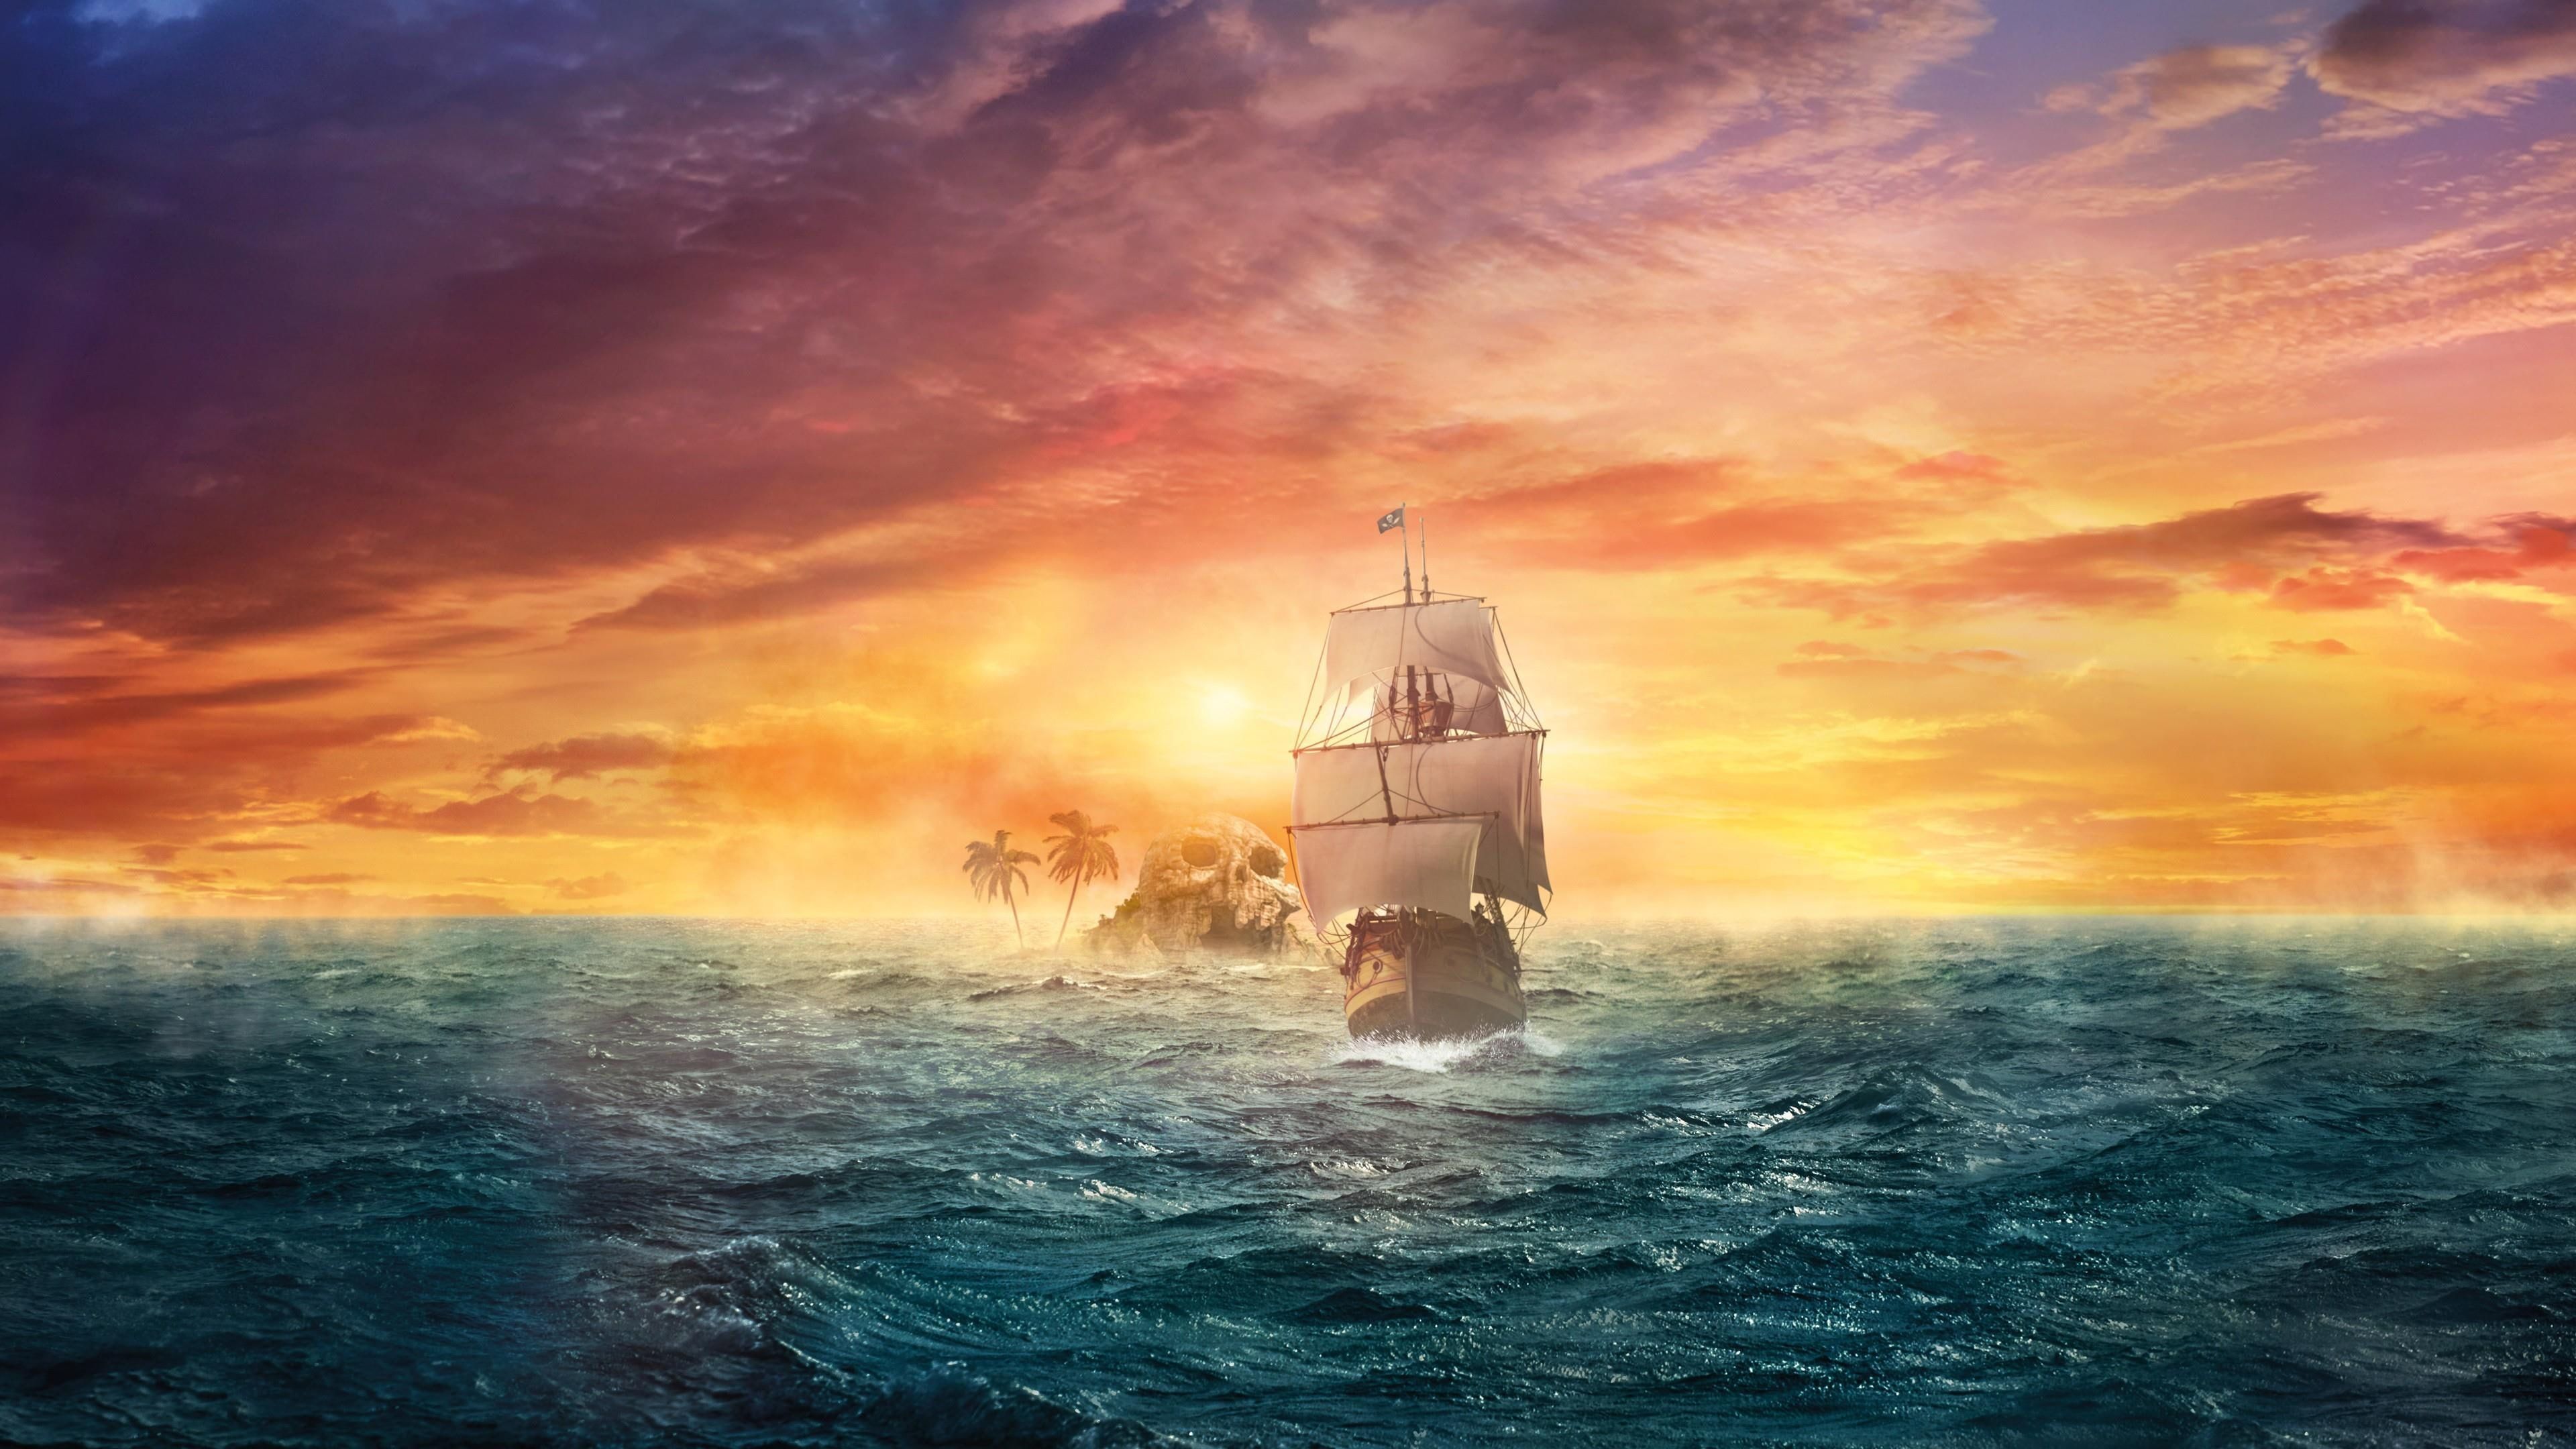 piracy pirate ship #pirate #cloud #cloudy orange sky ship of the line fantasy art naval ship sailing ship #sea #sunse. Water illustration, Ocean wallpaper, Ocean